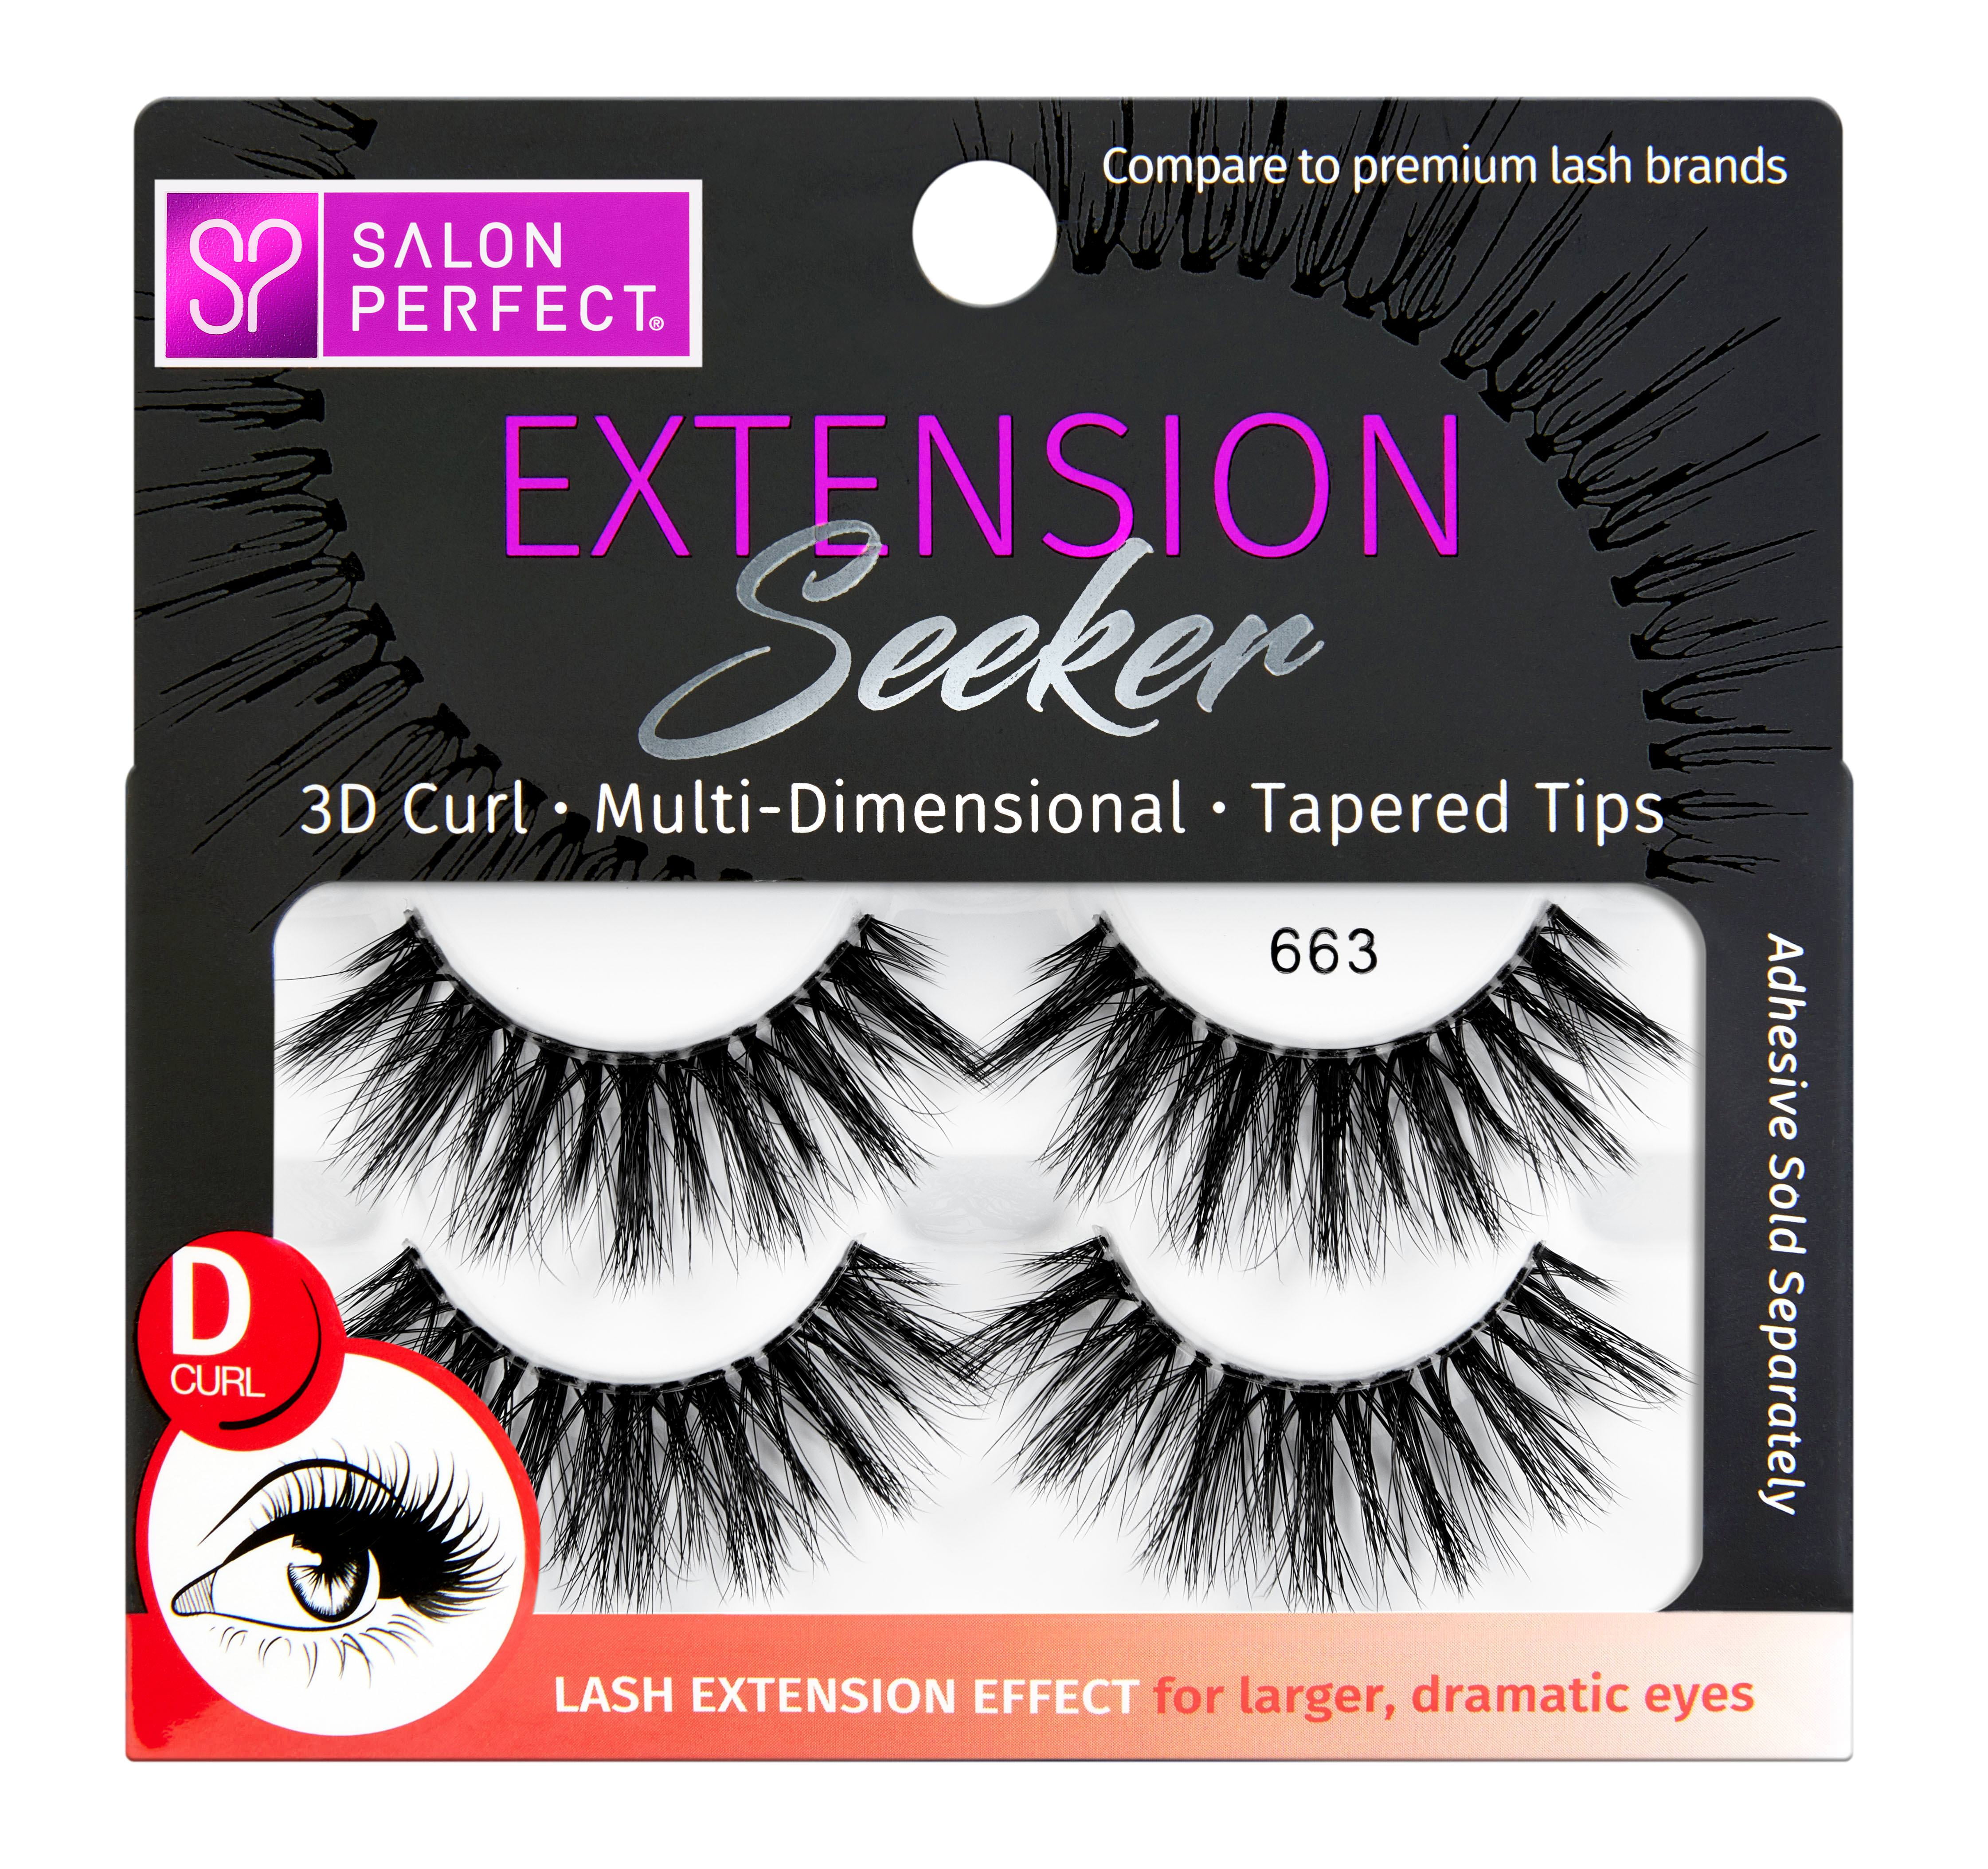 Salon Perfect Extension Seeker D Curl False Eyelashes 2 Pack 663 Walmart Com Walmart Com